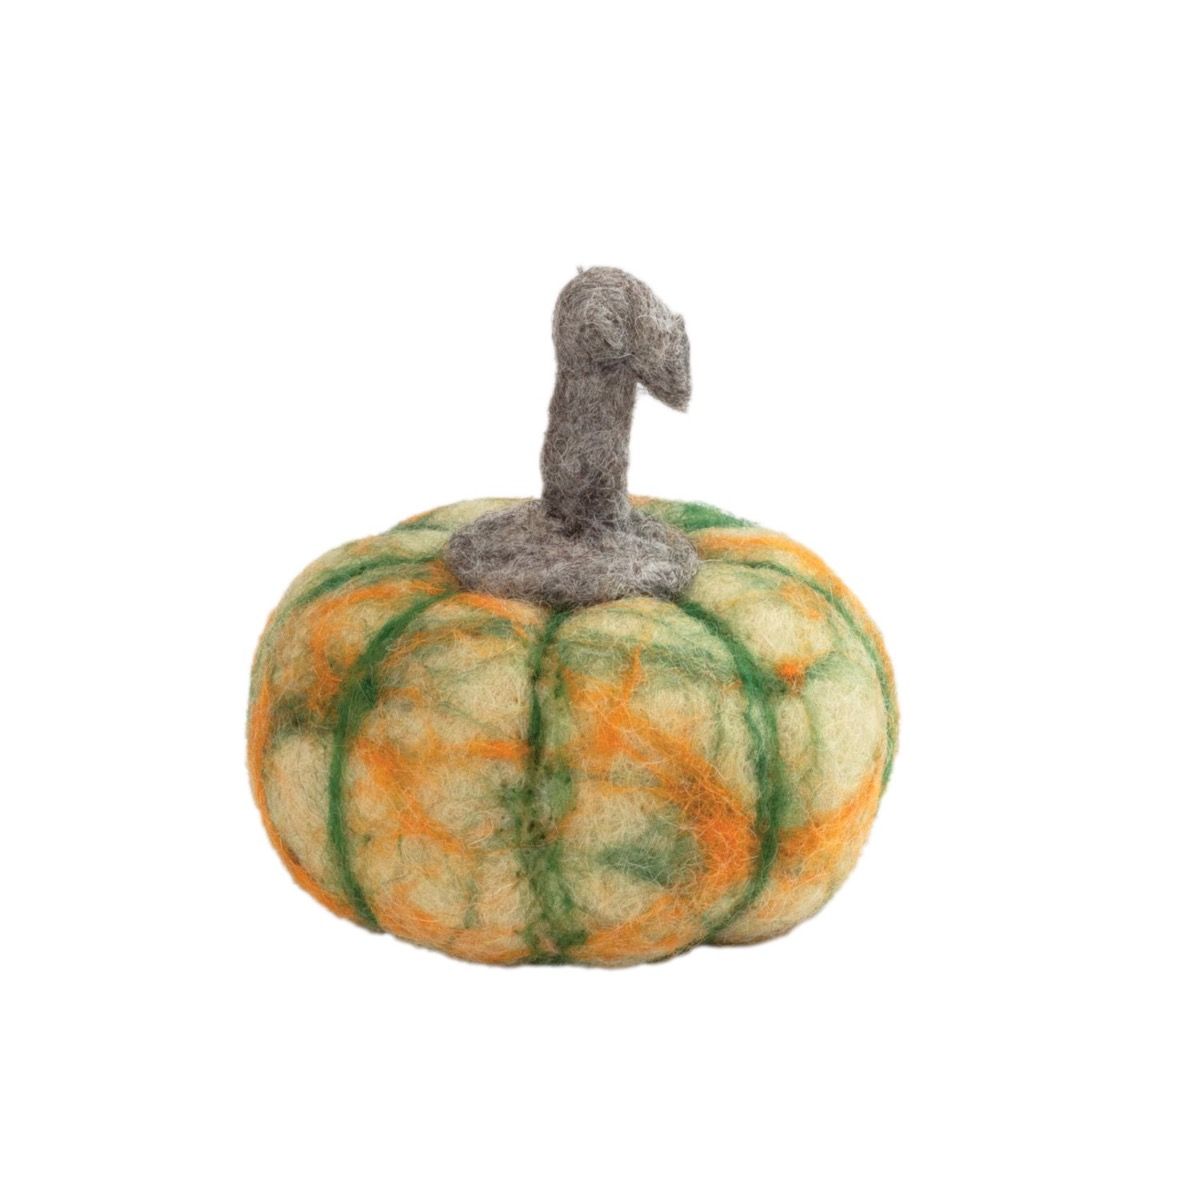 Handmade Wool Felt Pumpkins: Cushaw